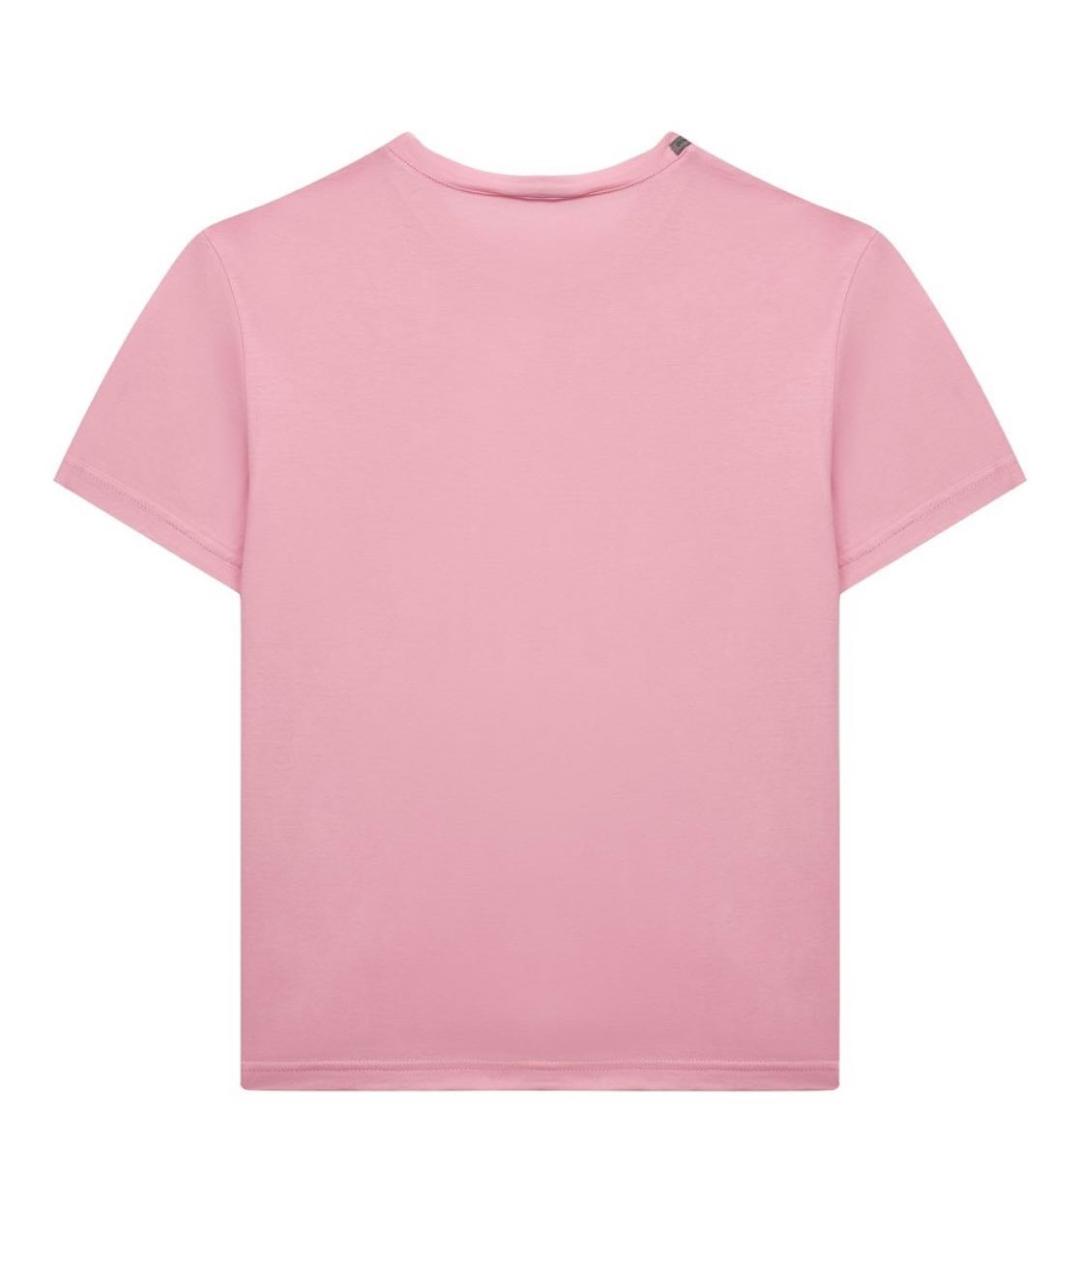 DOLCE&GABBANA Розовая хлопковая футболка, фото 2